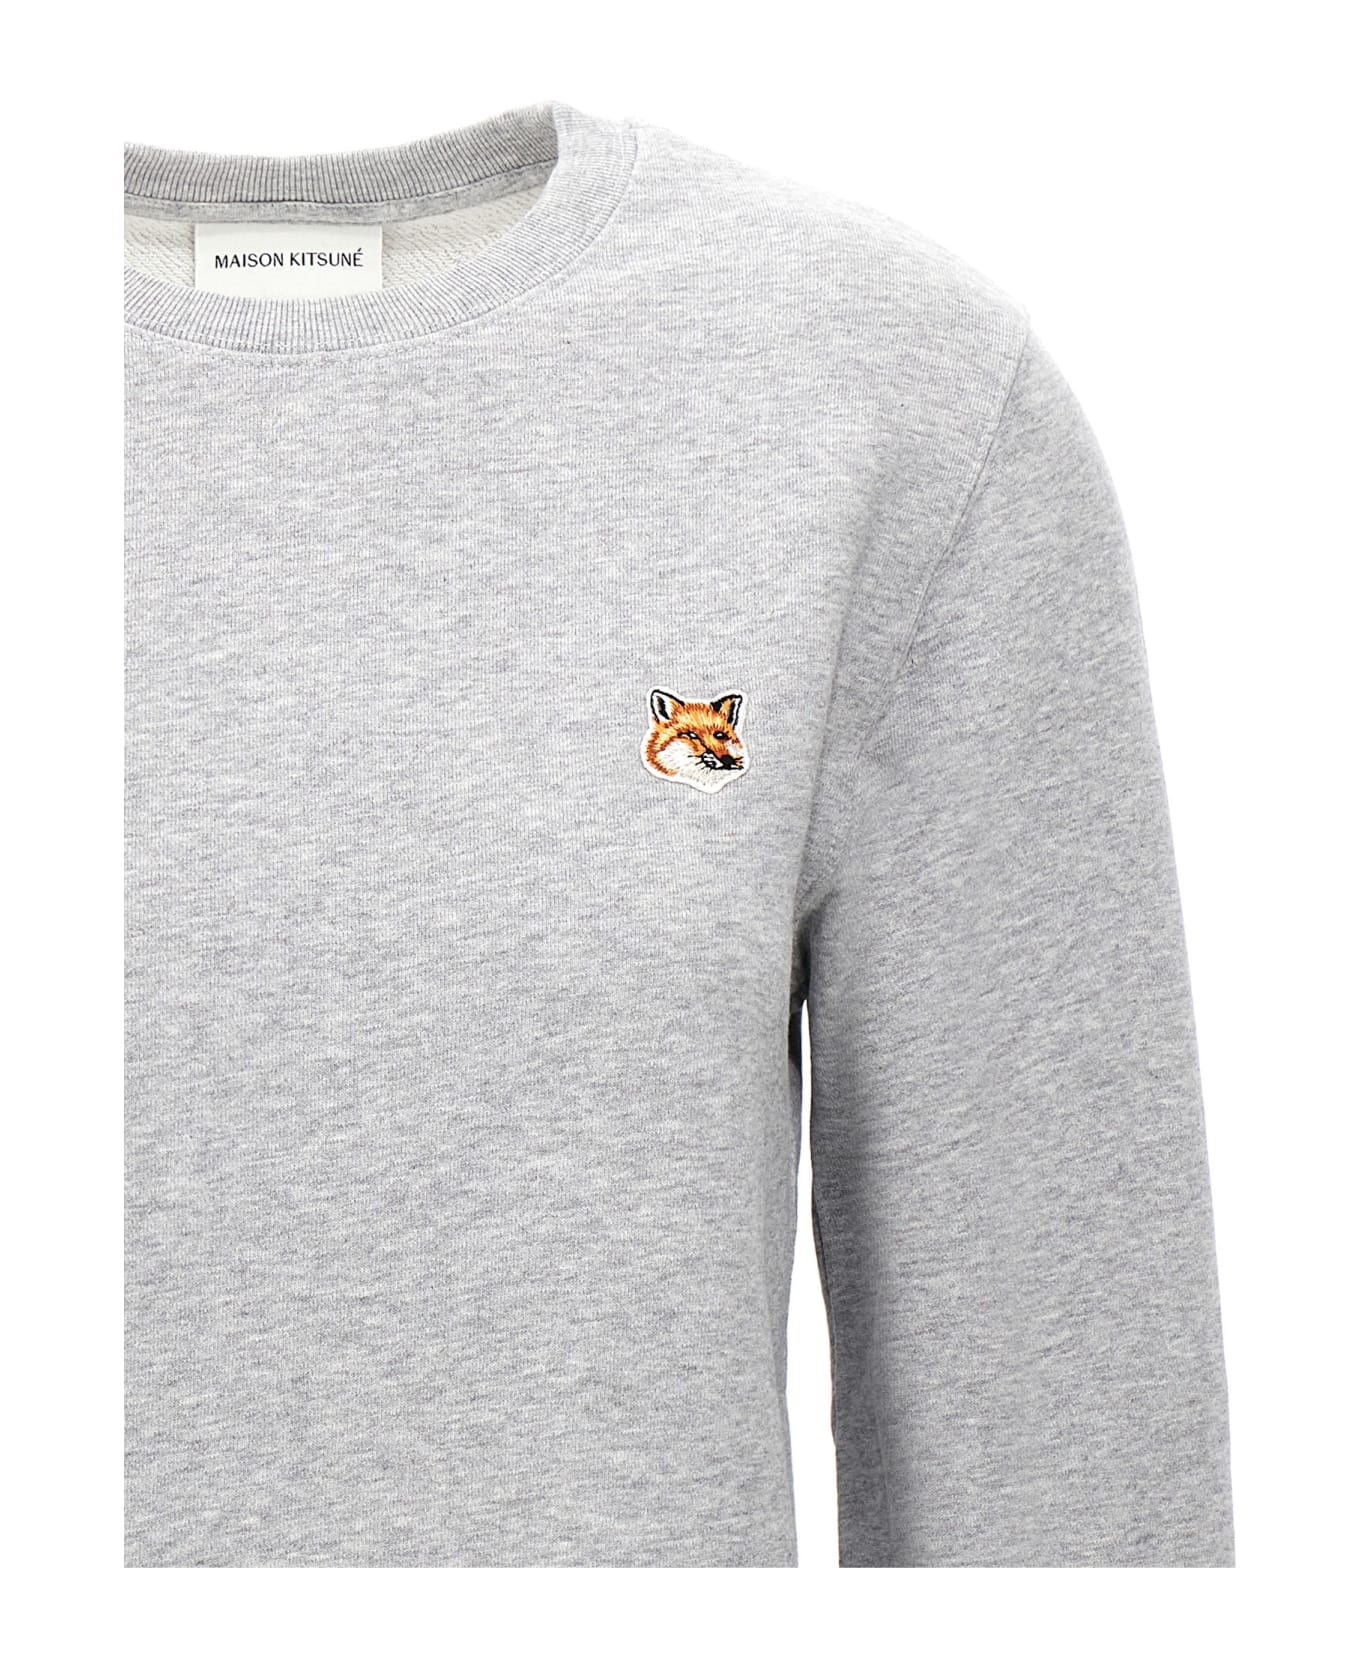 Maison Kitsuné 'fox Head' Sweatshirt - Grey melange